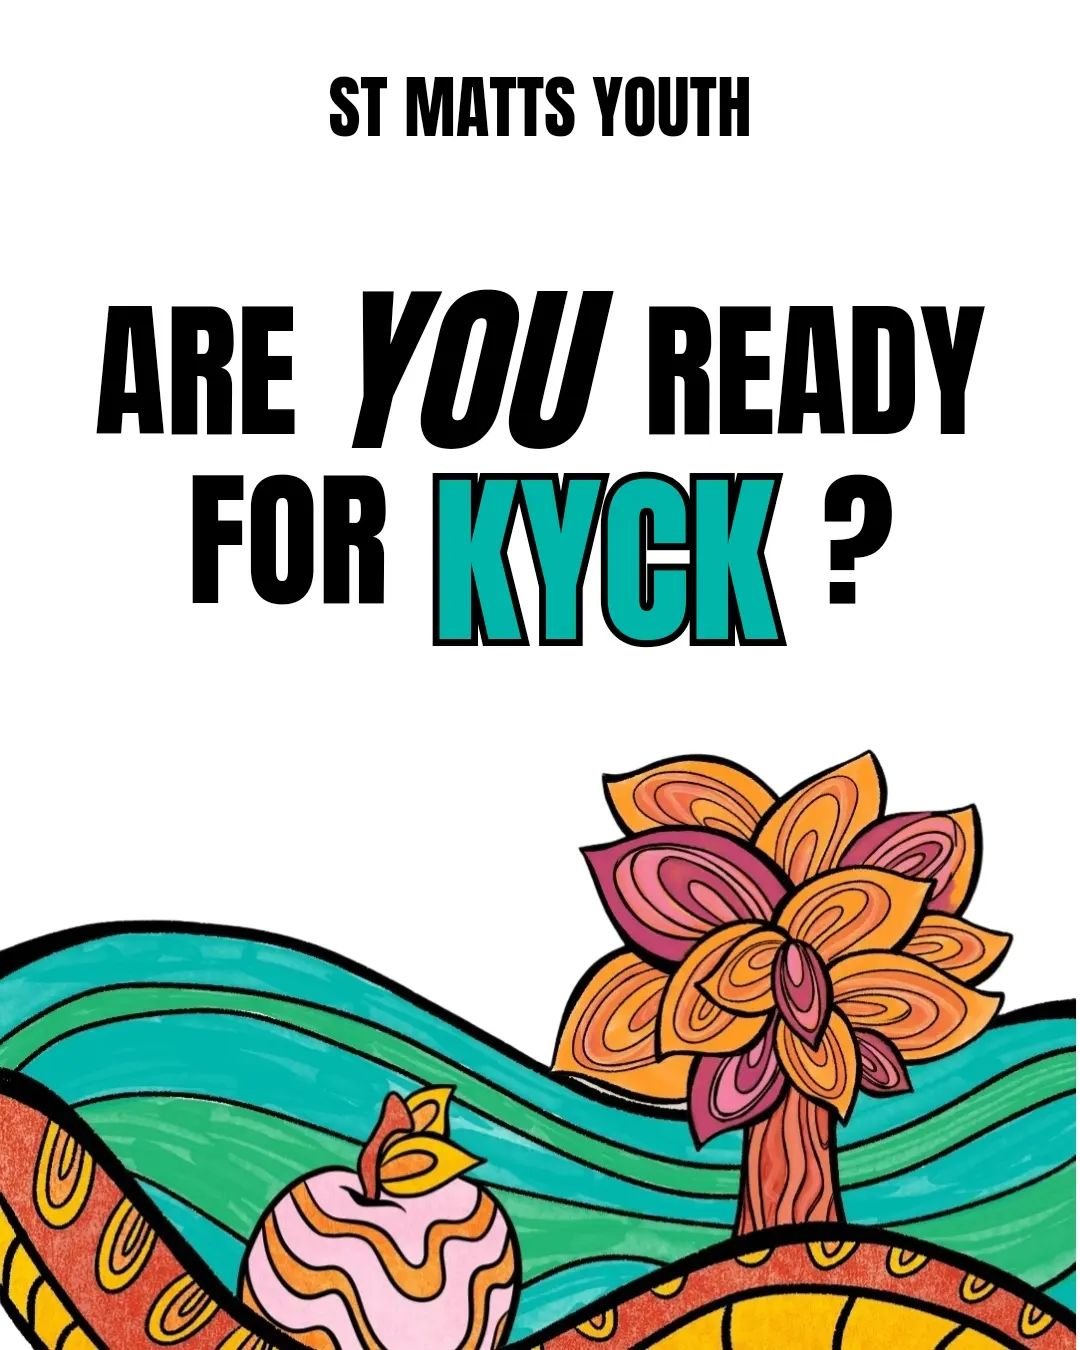 WE GO TO KYCK TOMORROW !! ARE YOU READY??